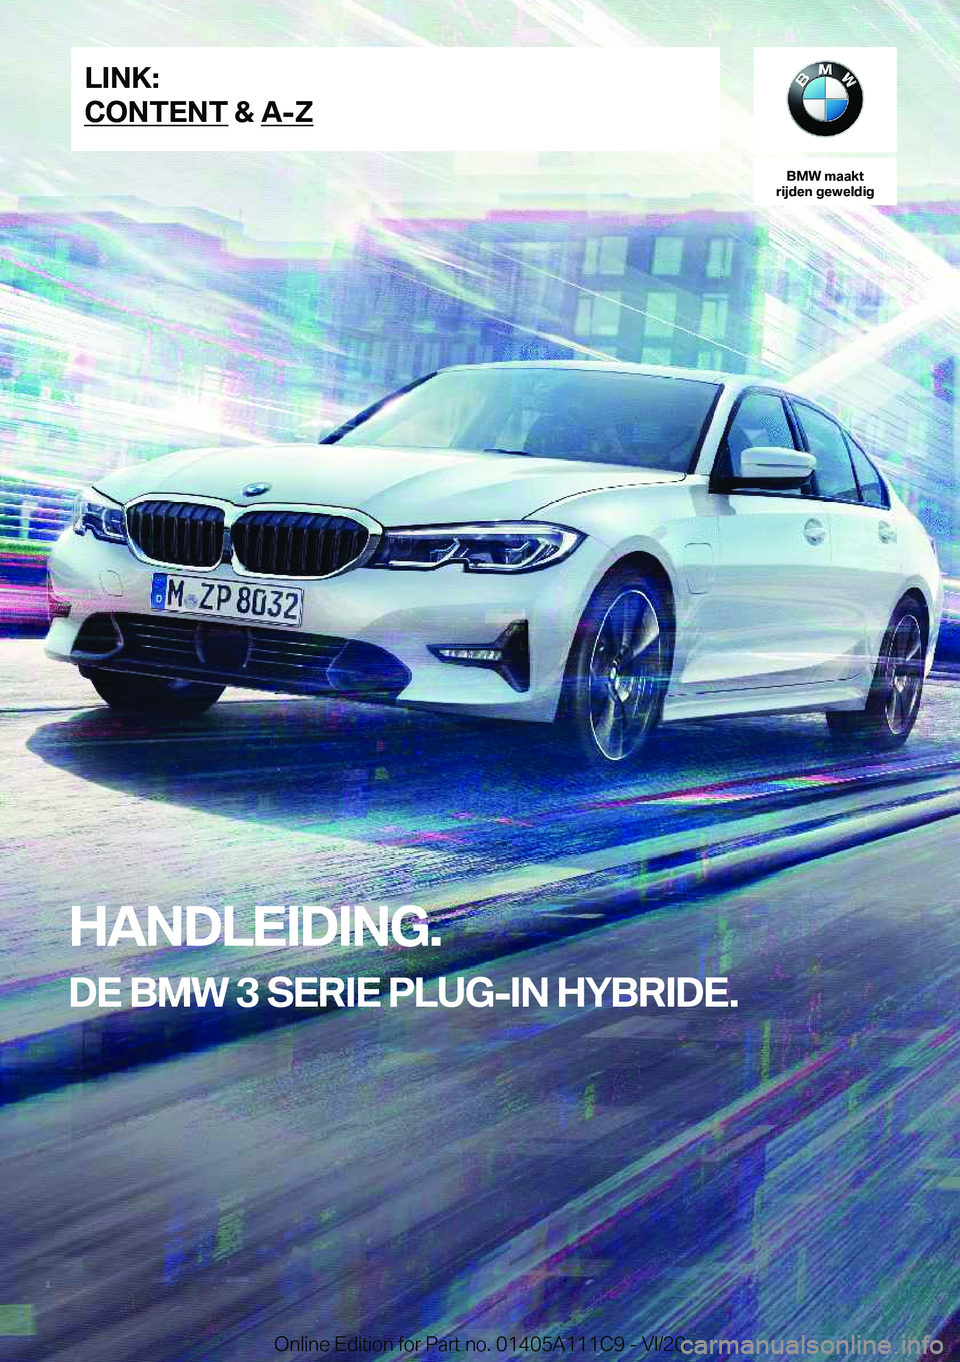 BMW 3 SERIES SEDAN PLUG-IN HYBRID 2021  Instructieboekjes (in Dutch) �B�M�W��m�a�a�k�t
�r�i�j�d�e�n��g�e�w�e�l�d�i�g
�H�A�N�D�L�E�I�D�I�N�G�.
�D�E��B�M�W��3��S�E�R�I�E��P�L�U�G�-�I�N��H�Y�B�R�I�D�E�.�L�I�N�K�:
�C�O�N�T�E�N�T��&��A�-�Z�O�n�l�i�n�e��E�d�i�t�i�o